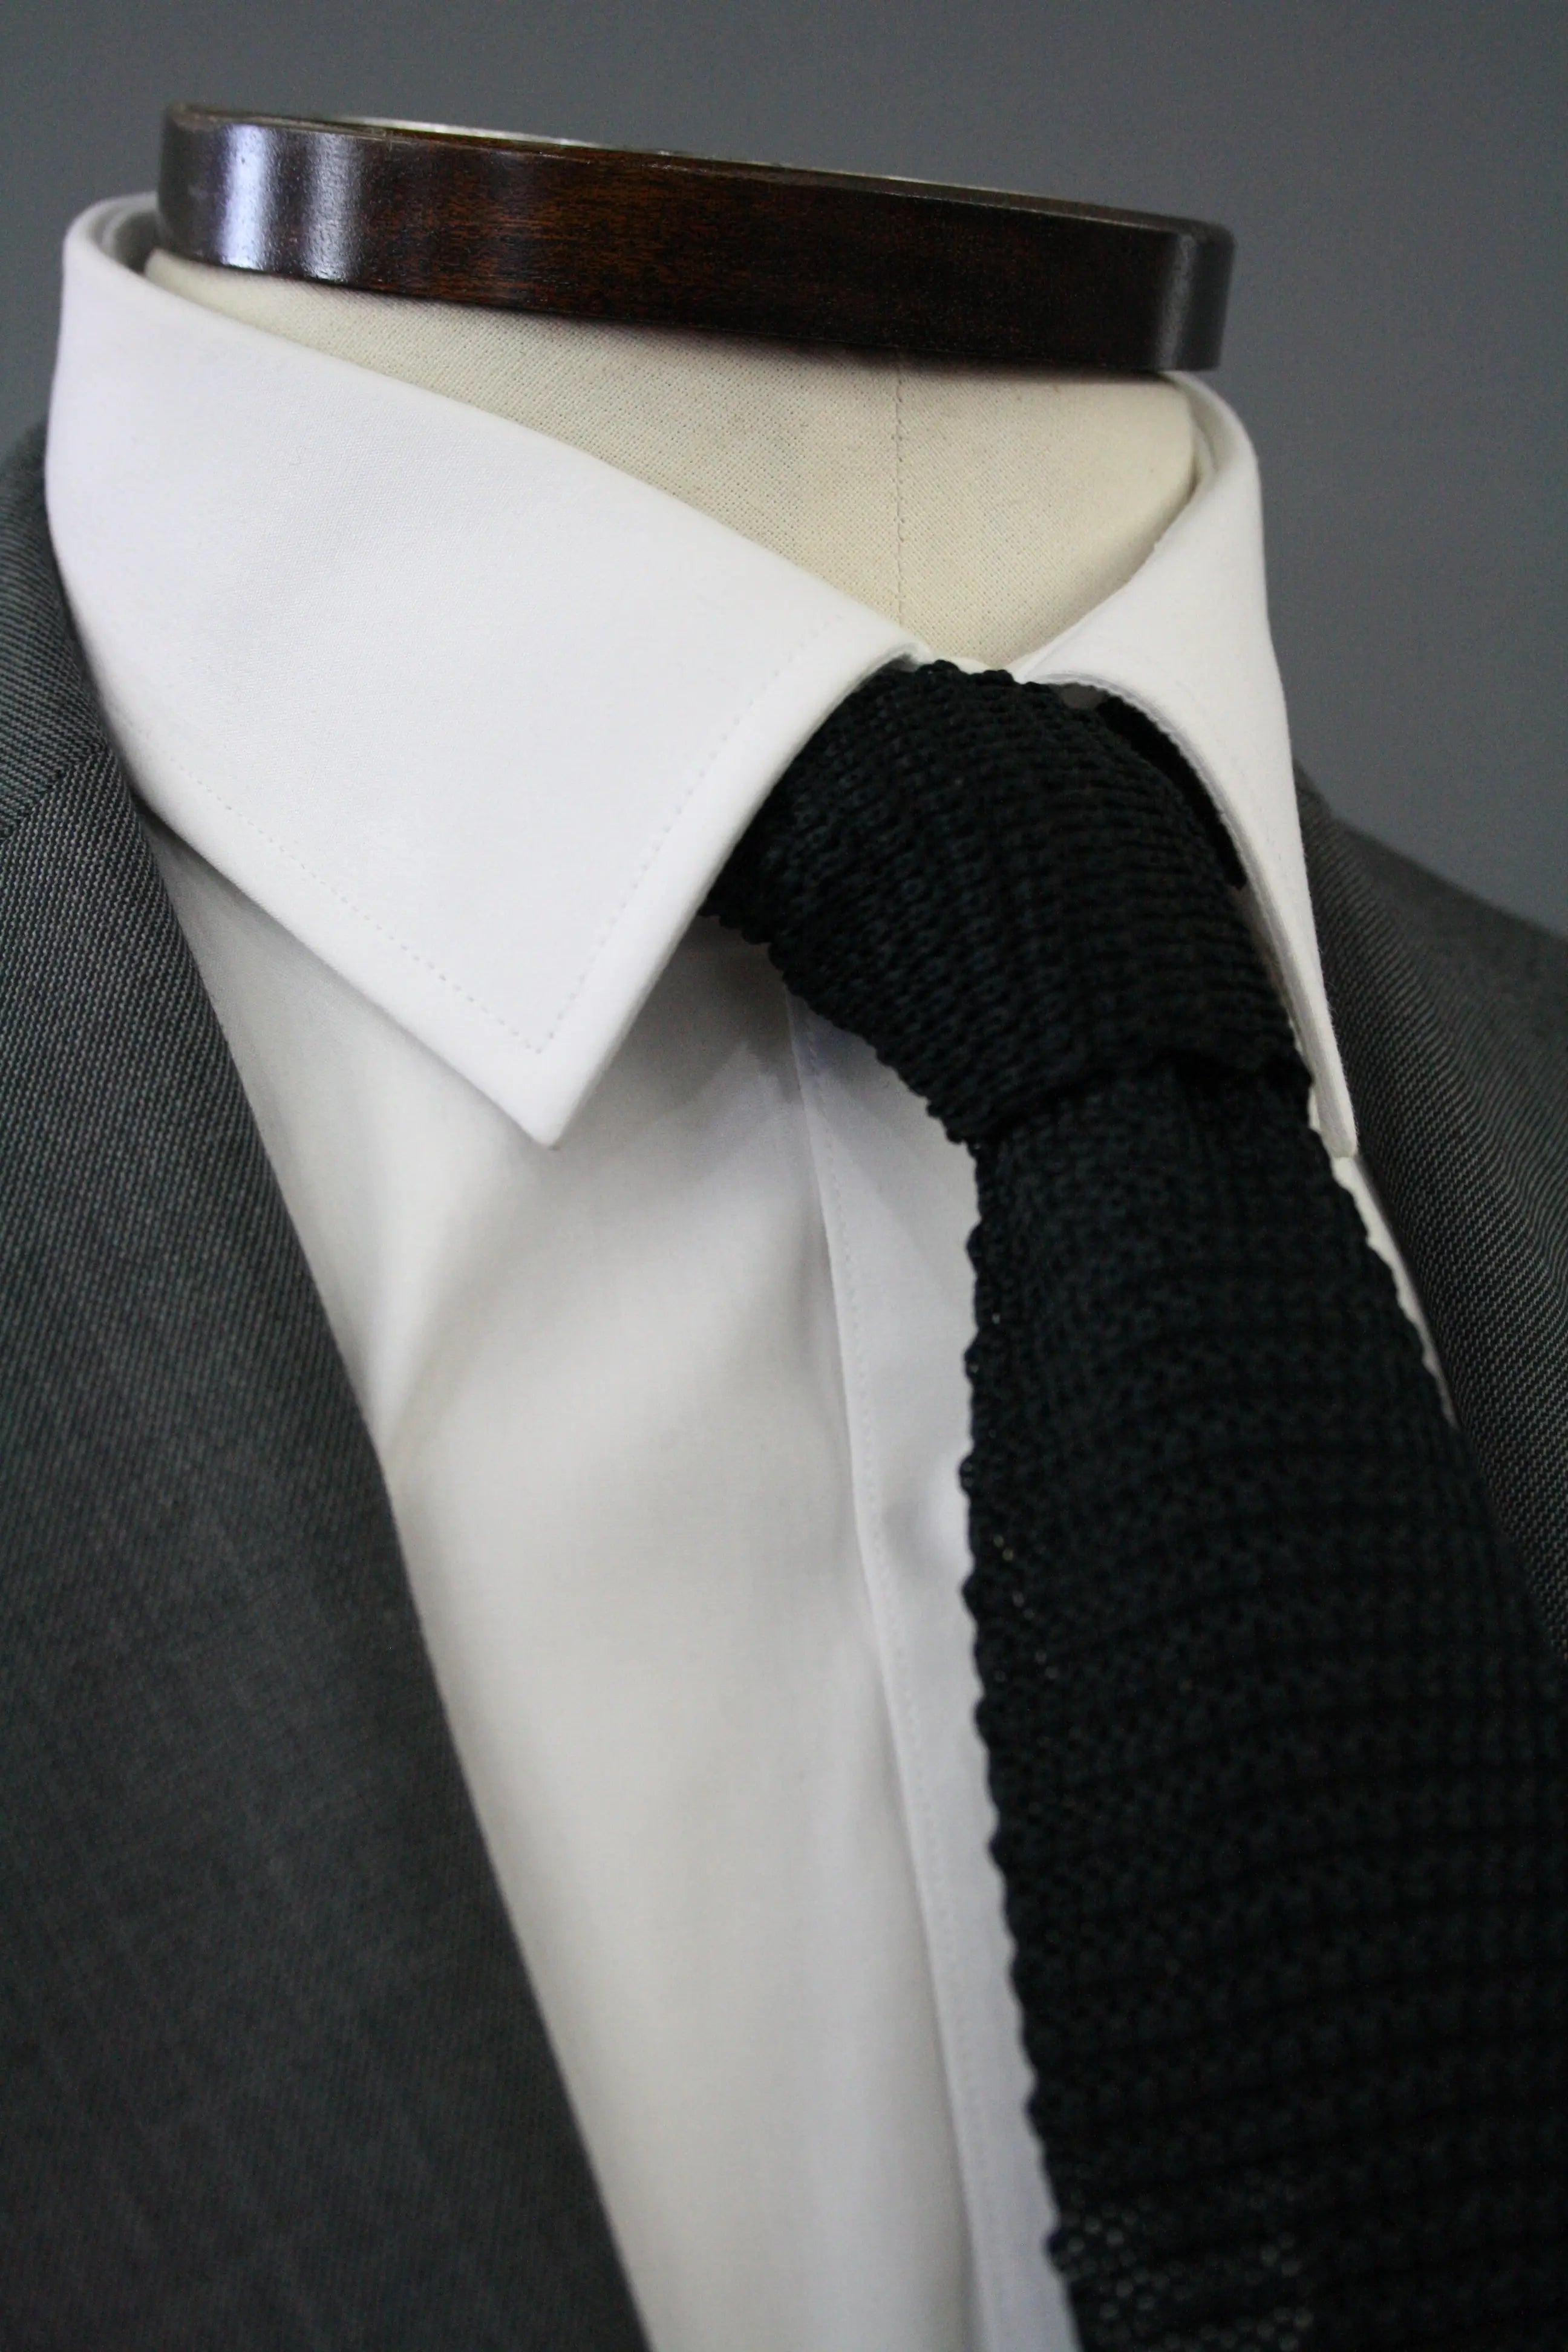 Knightsbridge Neckwear Black Knitted Silk Tie